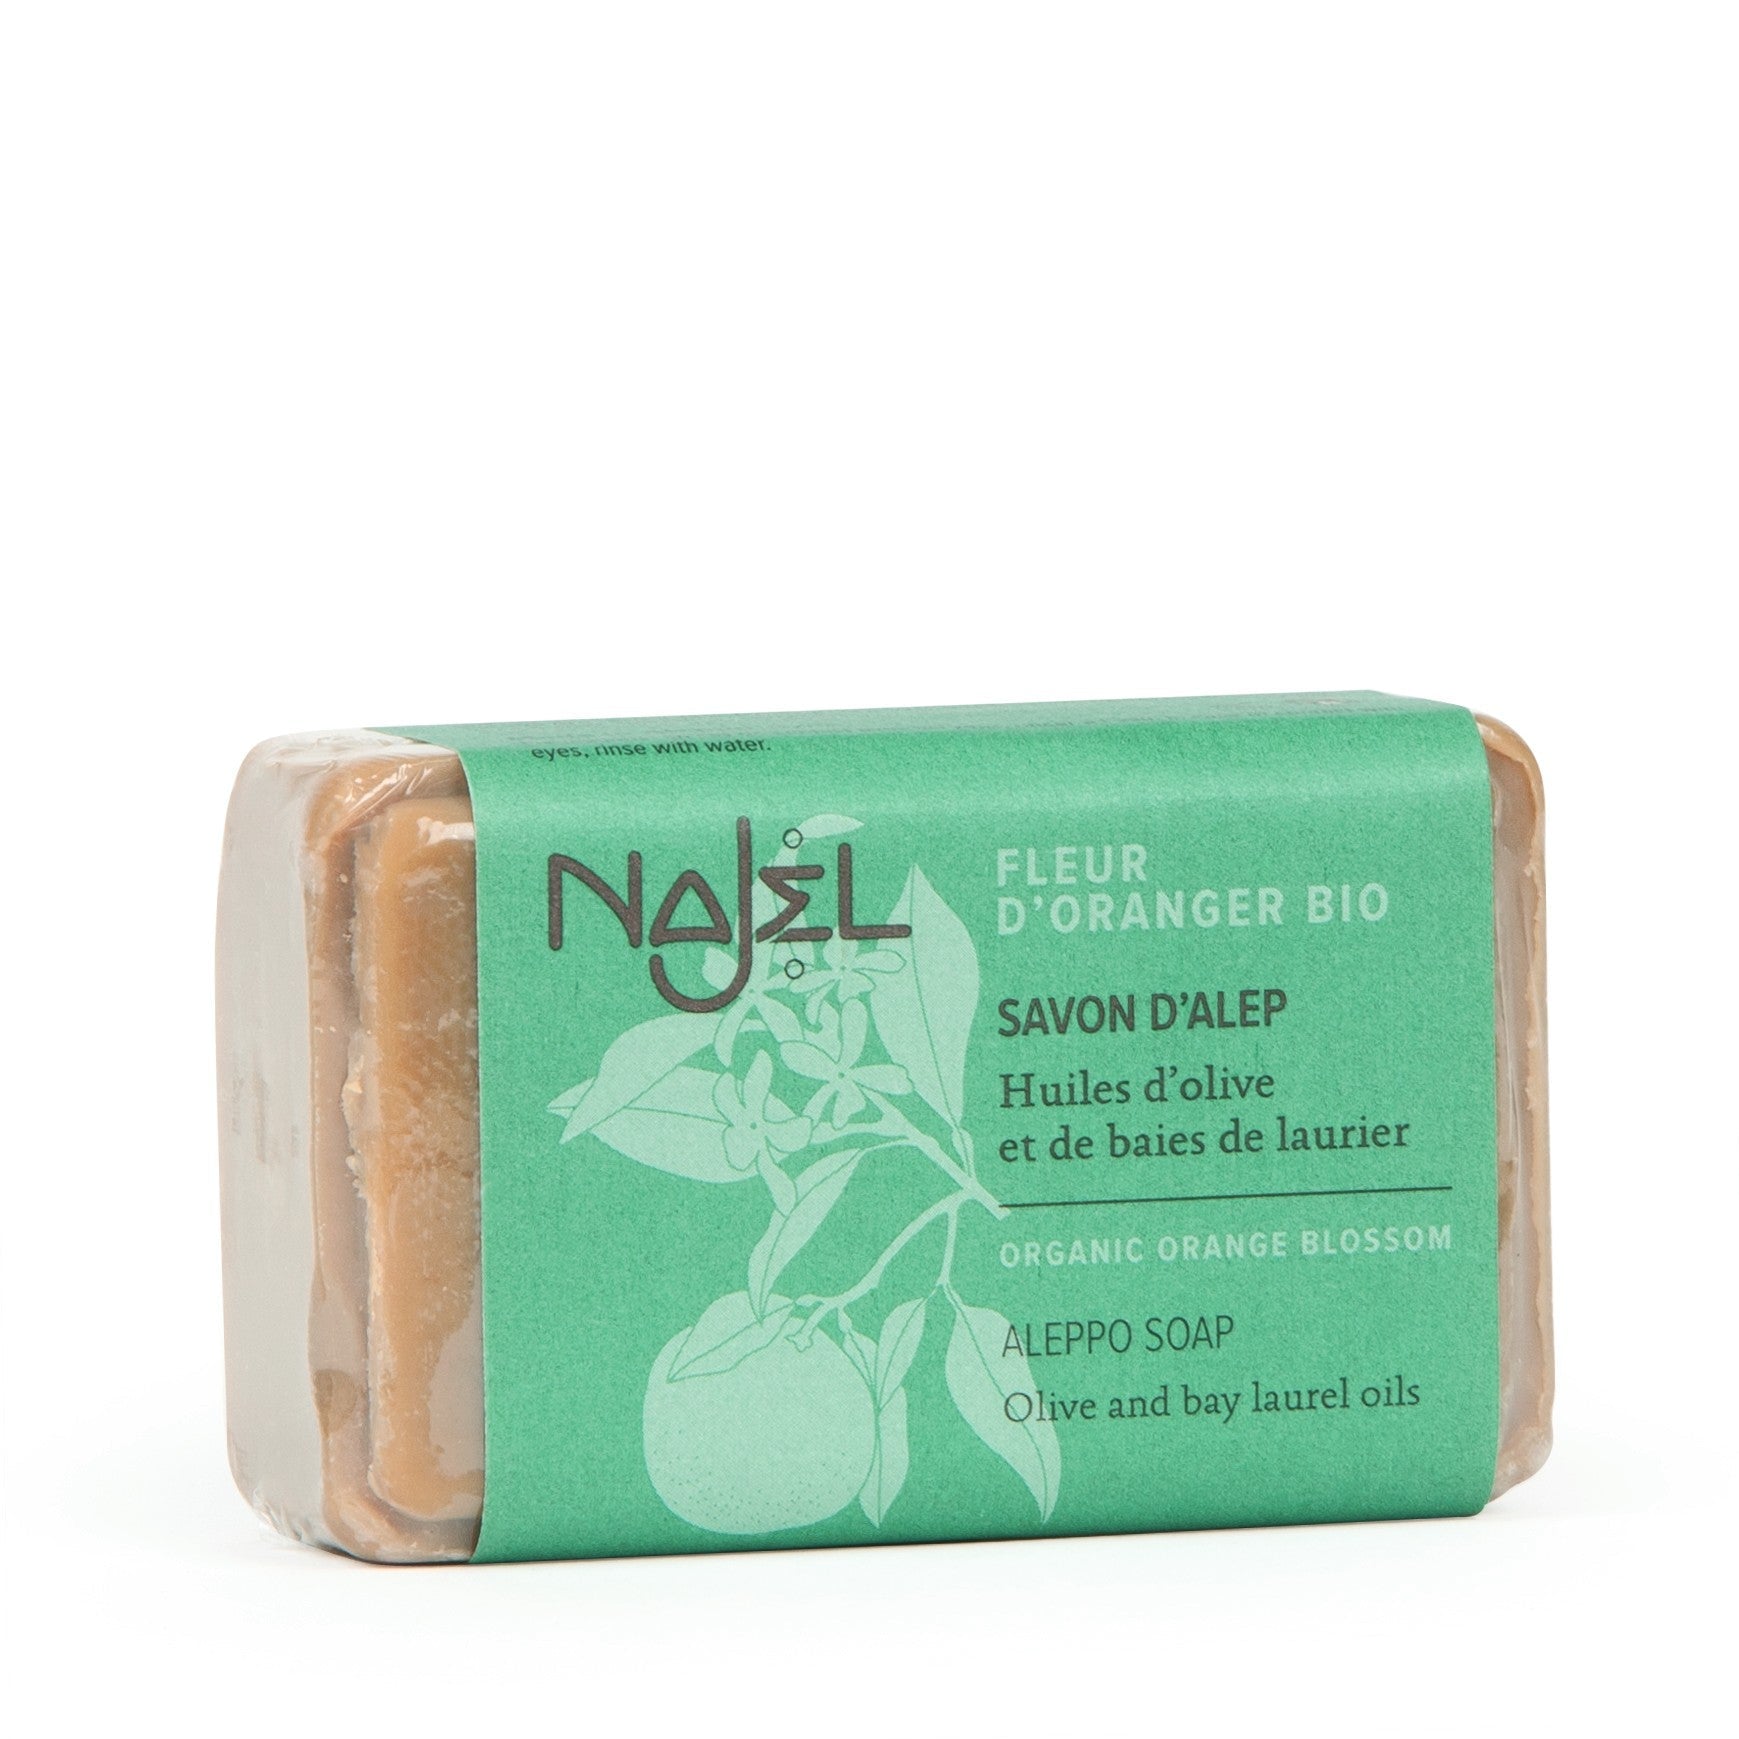 NAJEL Organic Skincare - Aleppo Soap Organic Orange Blossom, 100g, Organic, Vegan